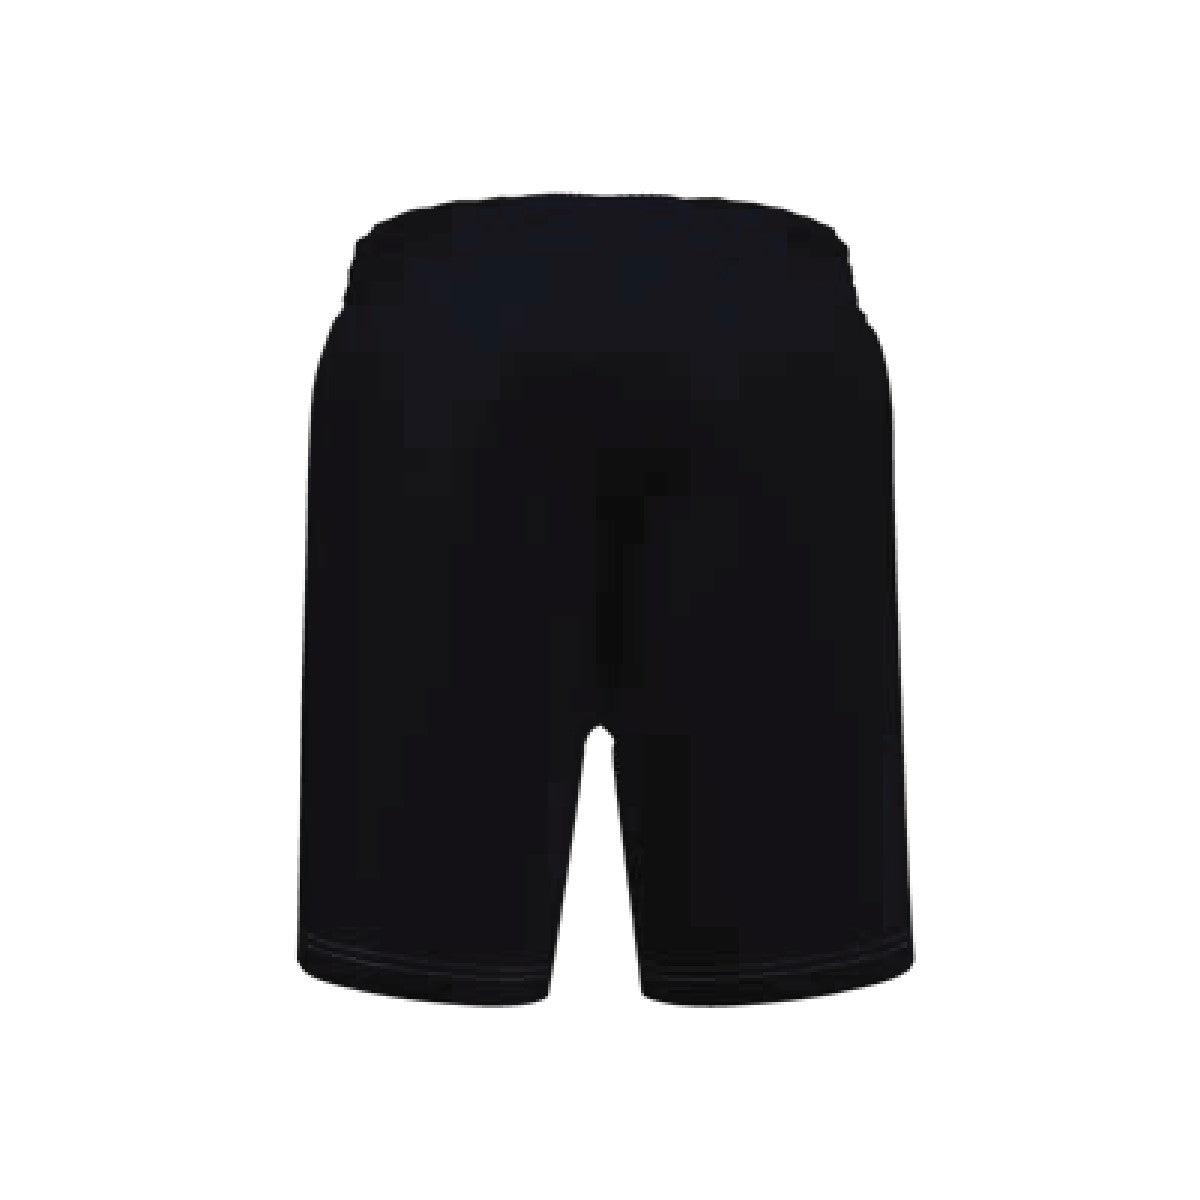 Paladin Men's Tennis Baseline Shorts Black